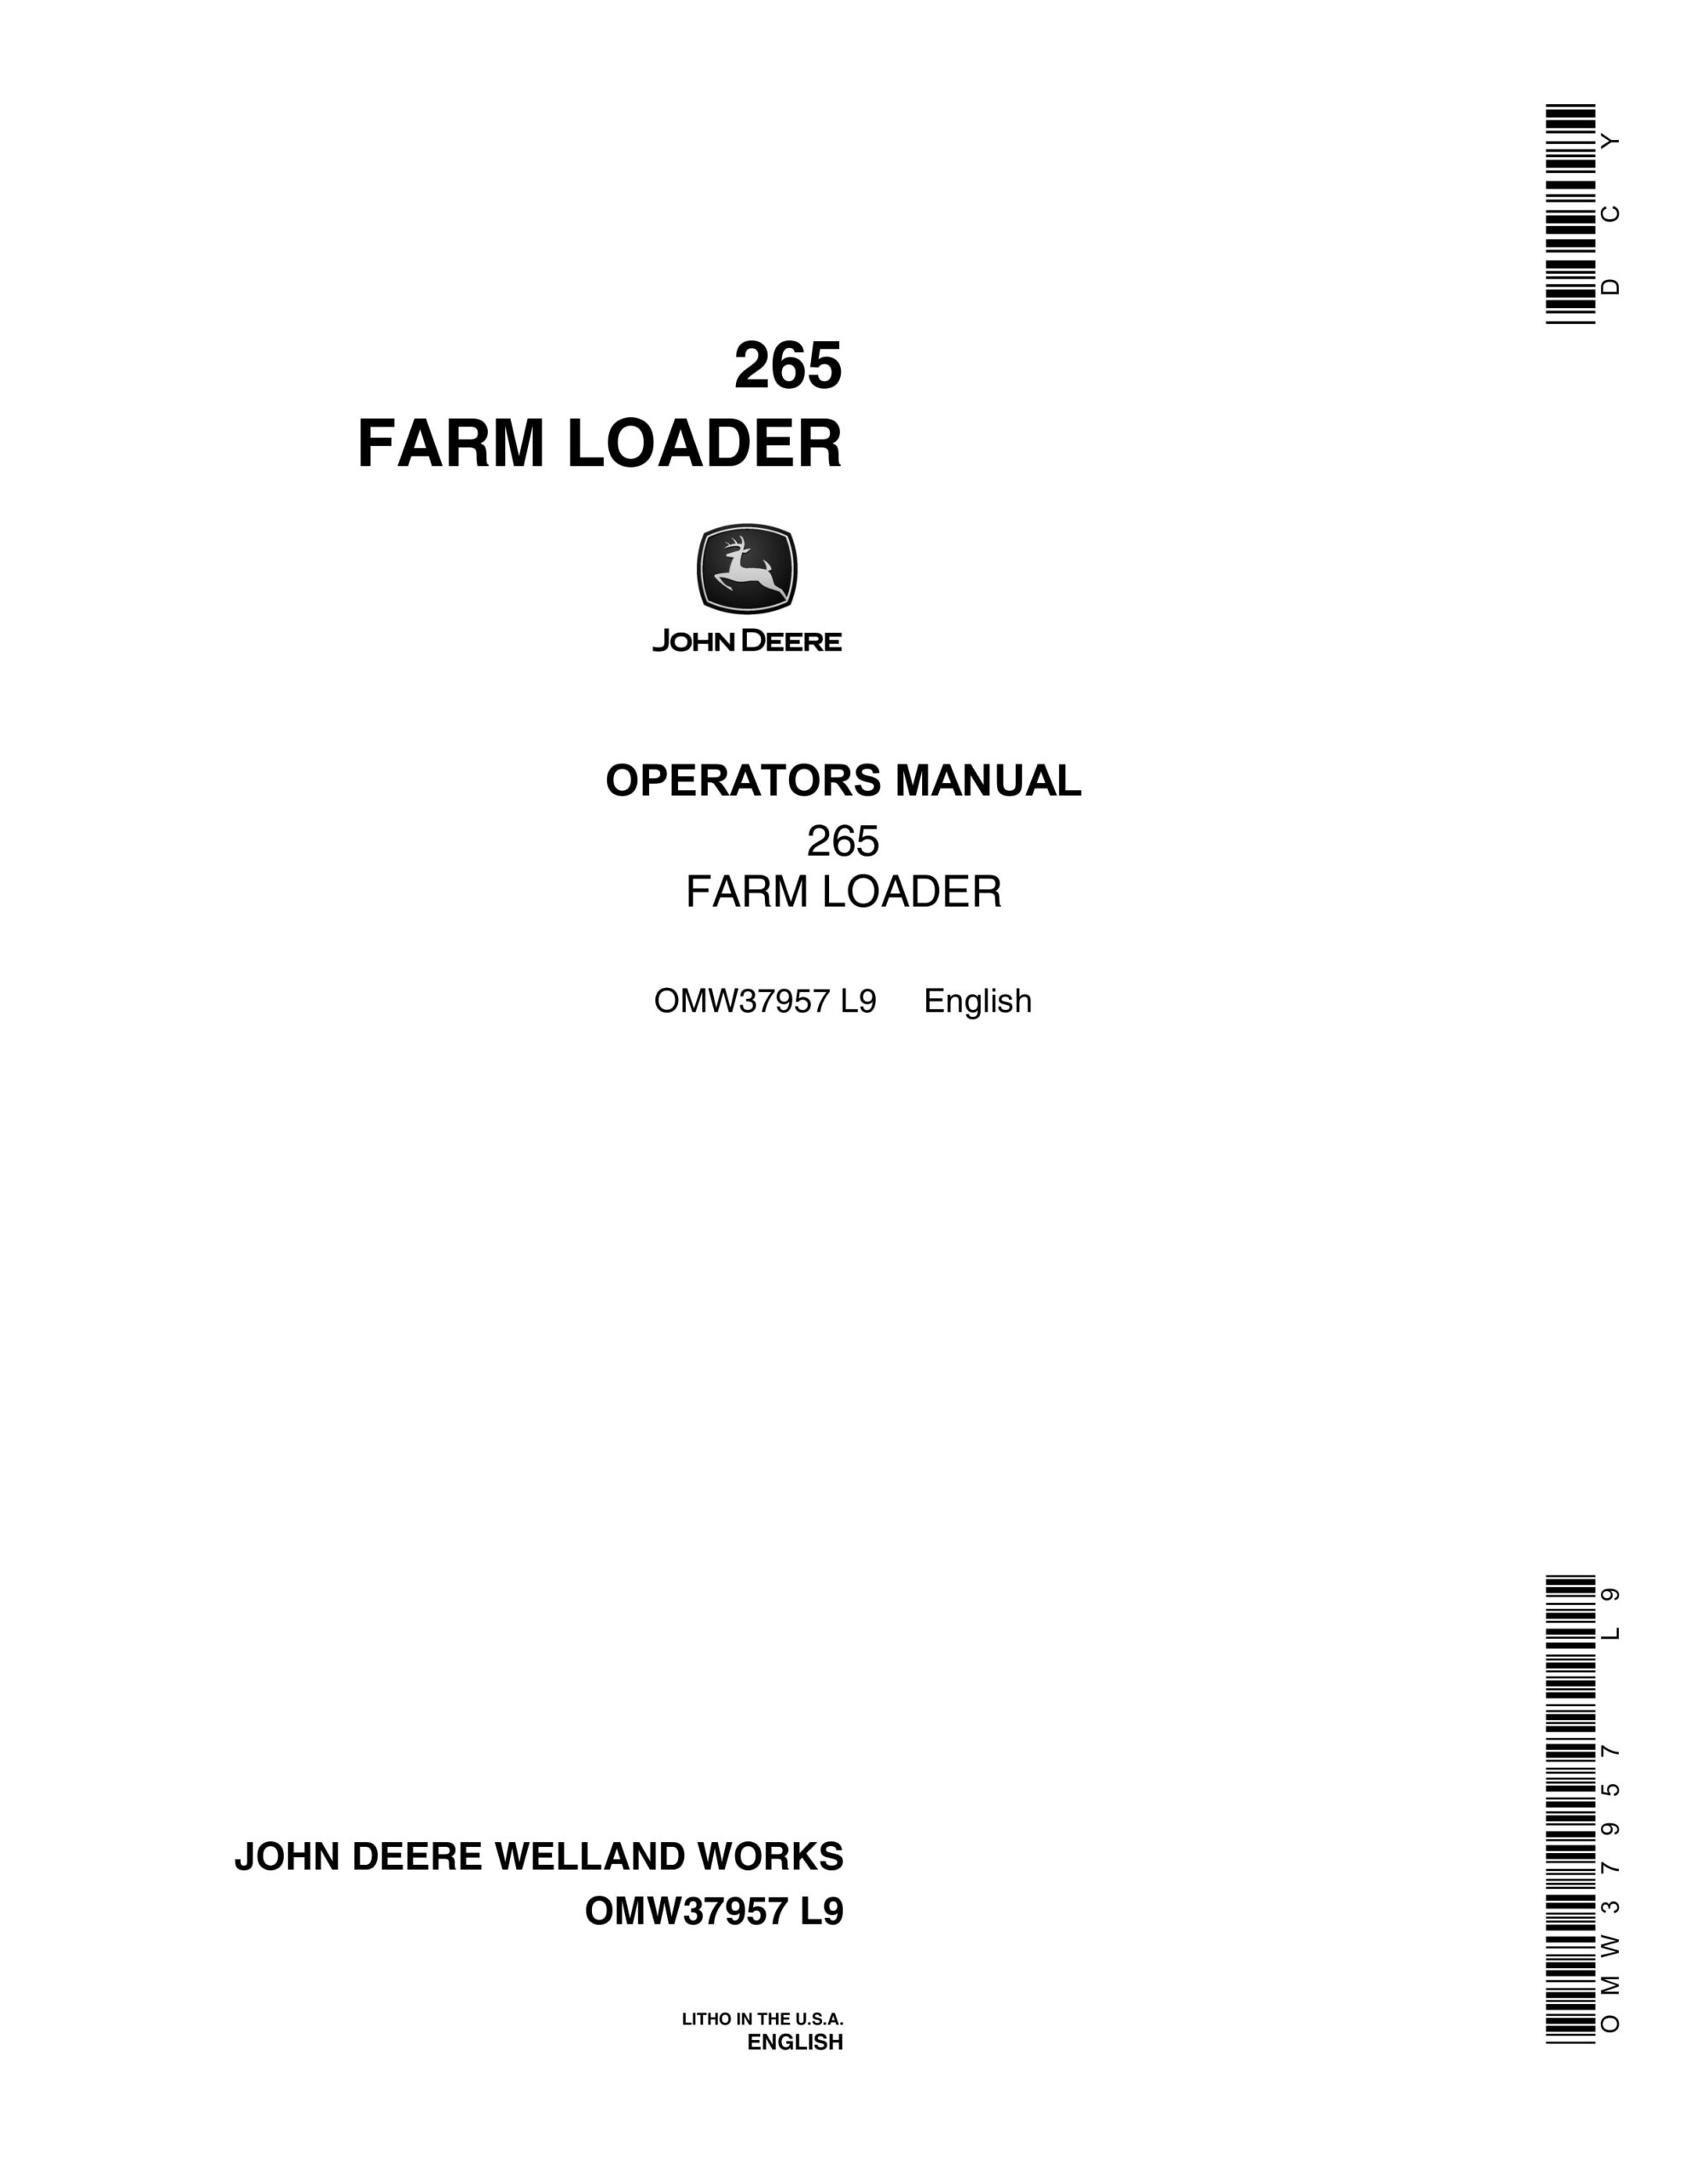 John Deere 265 FARM LOADERS Operator Manual OMW37957-1